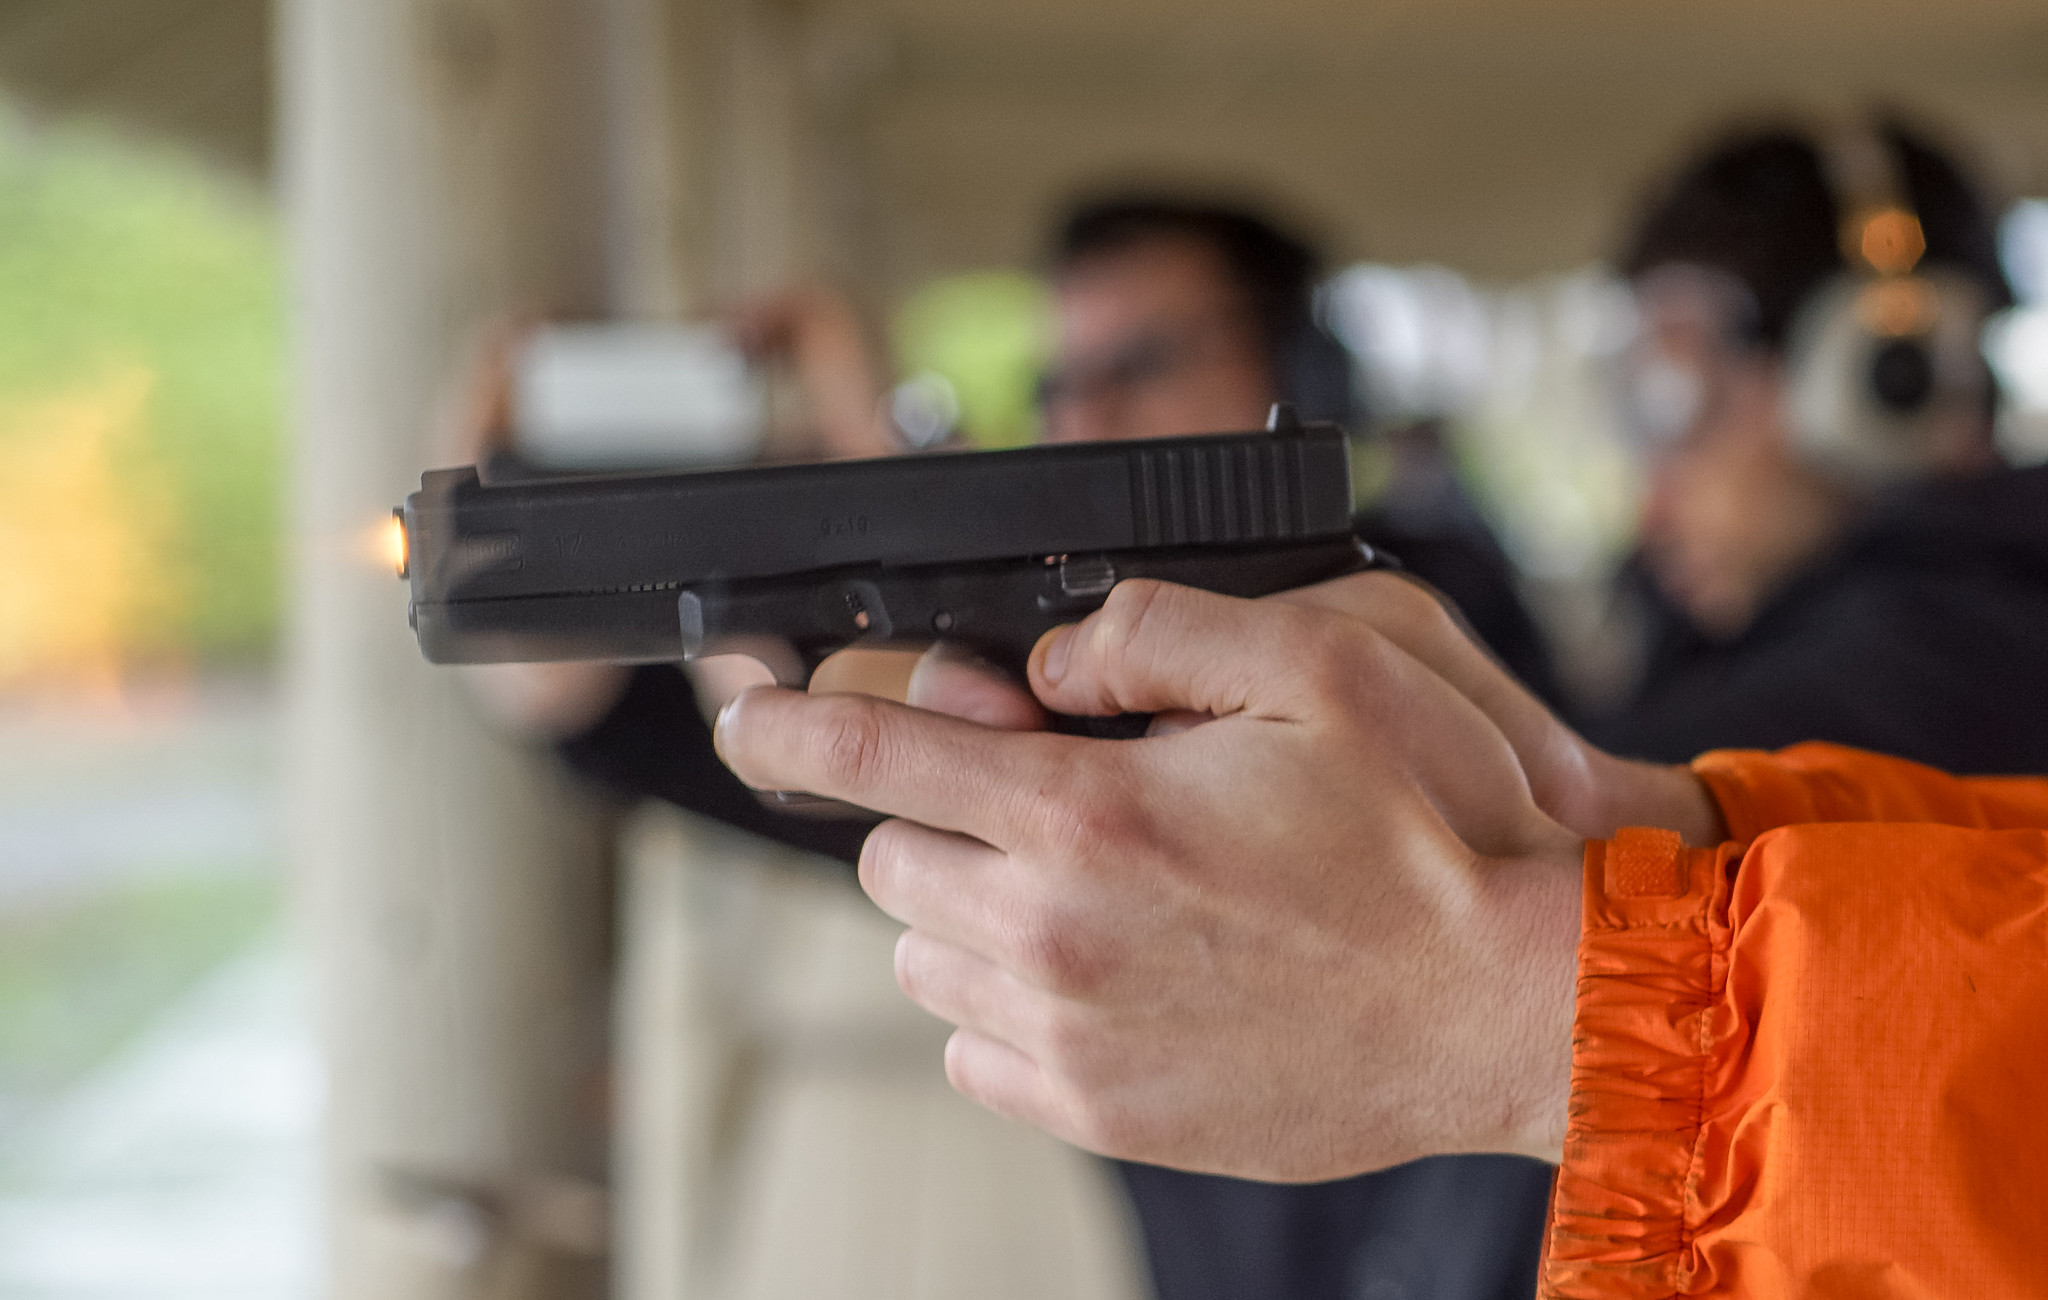 A gun being fired at a range. (Credit: Peretz Partensky/ Flickr)